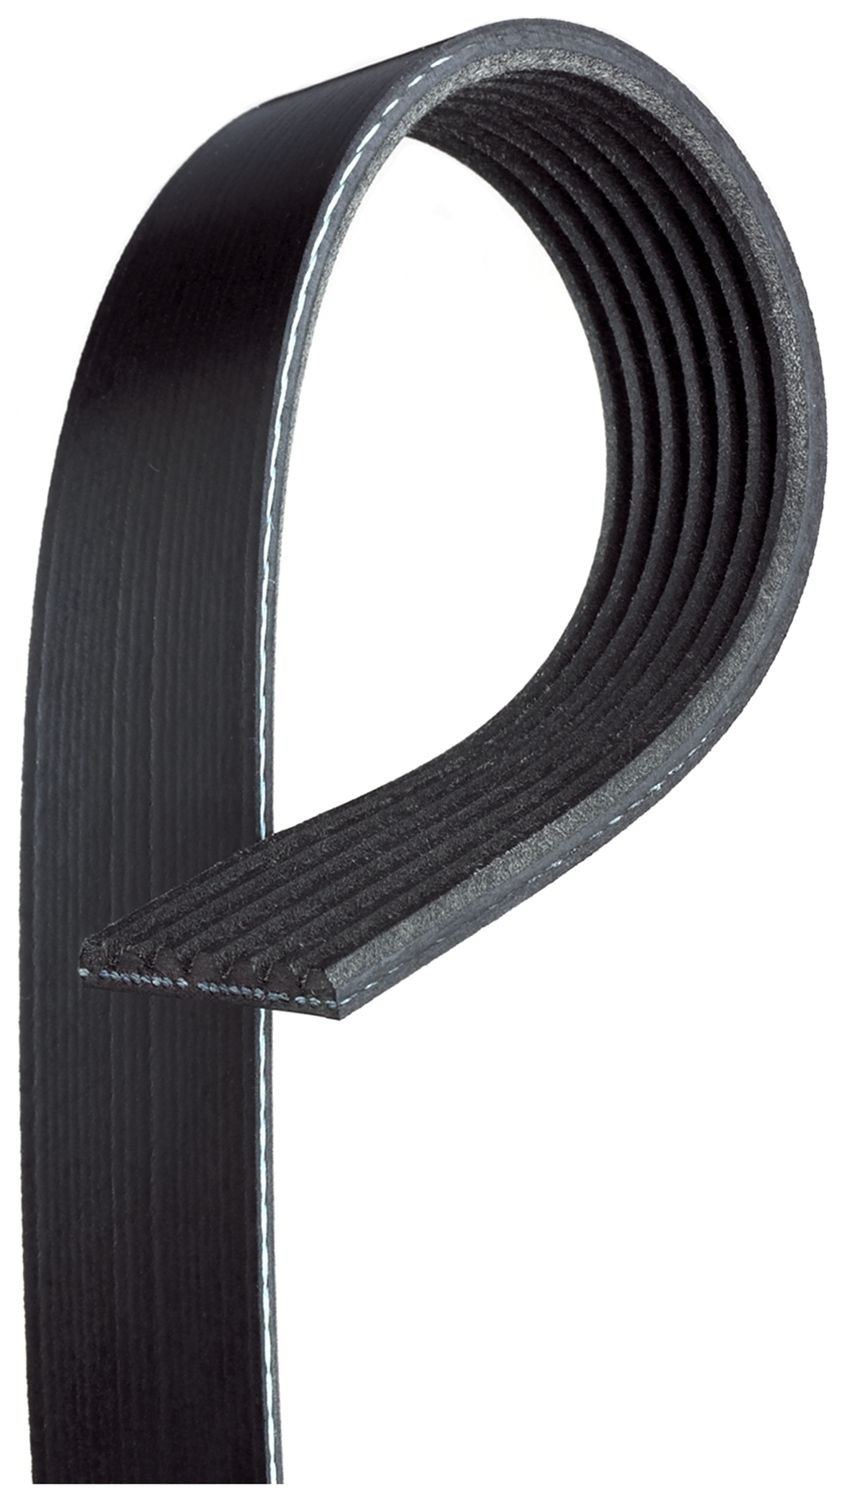 GATES 7PK1088 Serpentine belt 1088mm, 7, G-Force™ C12™ CVT Belt